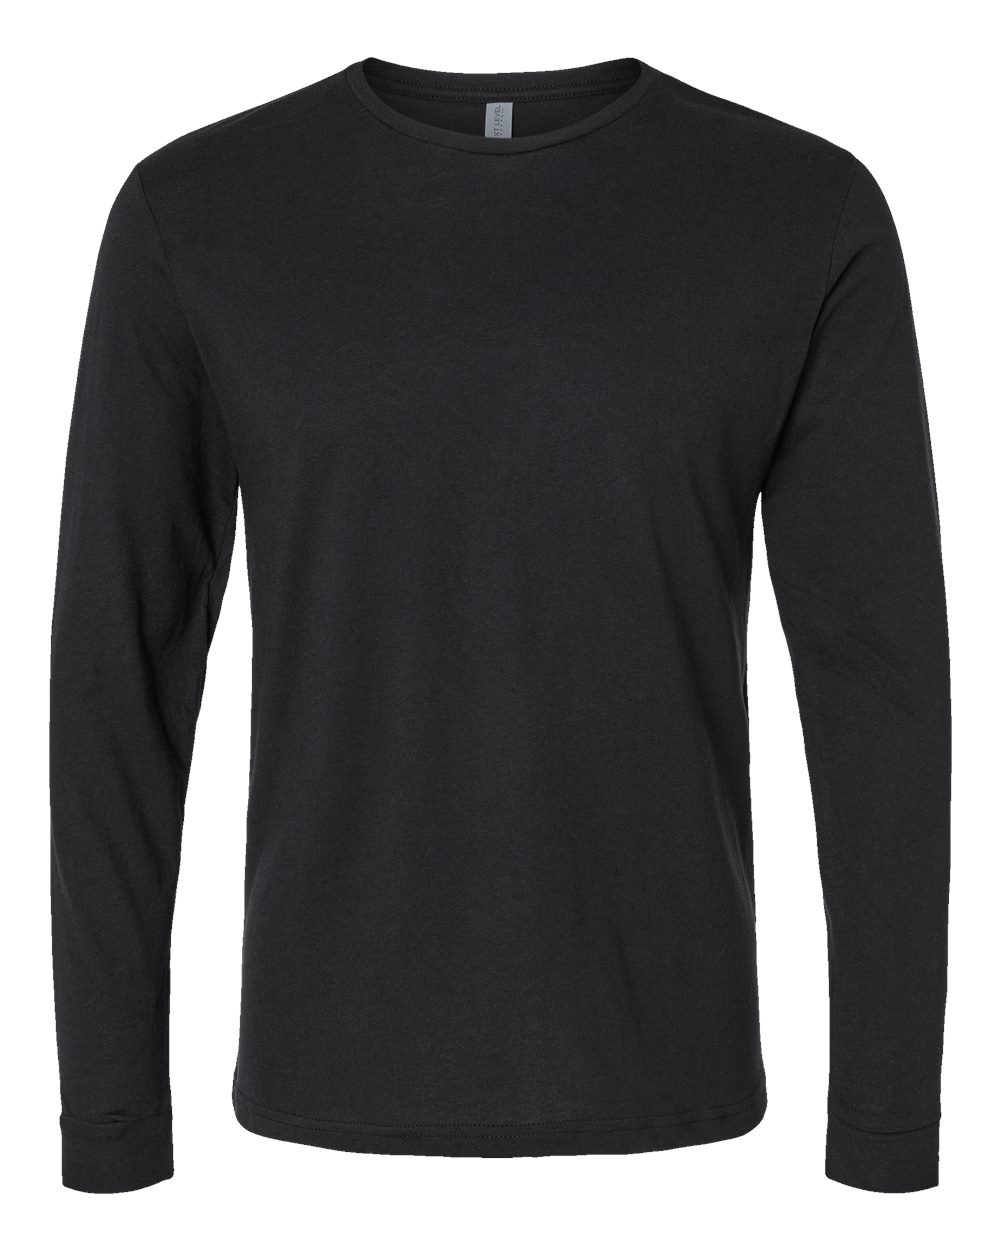 Next Level - CVC Long Sleeve T-Shirt - 6211